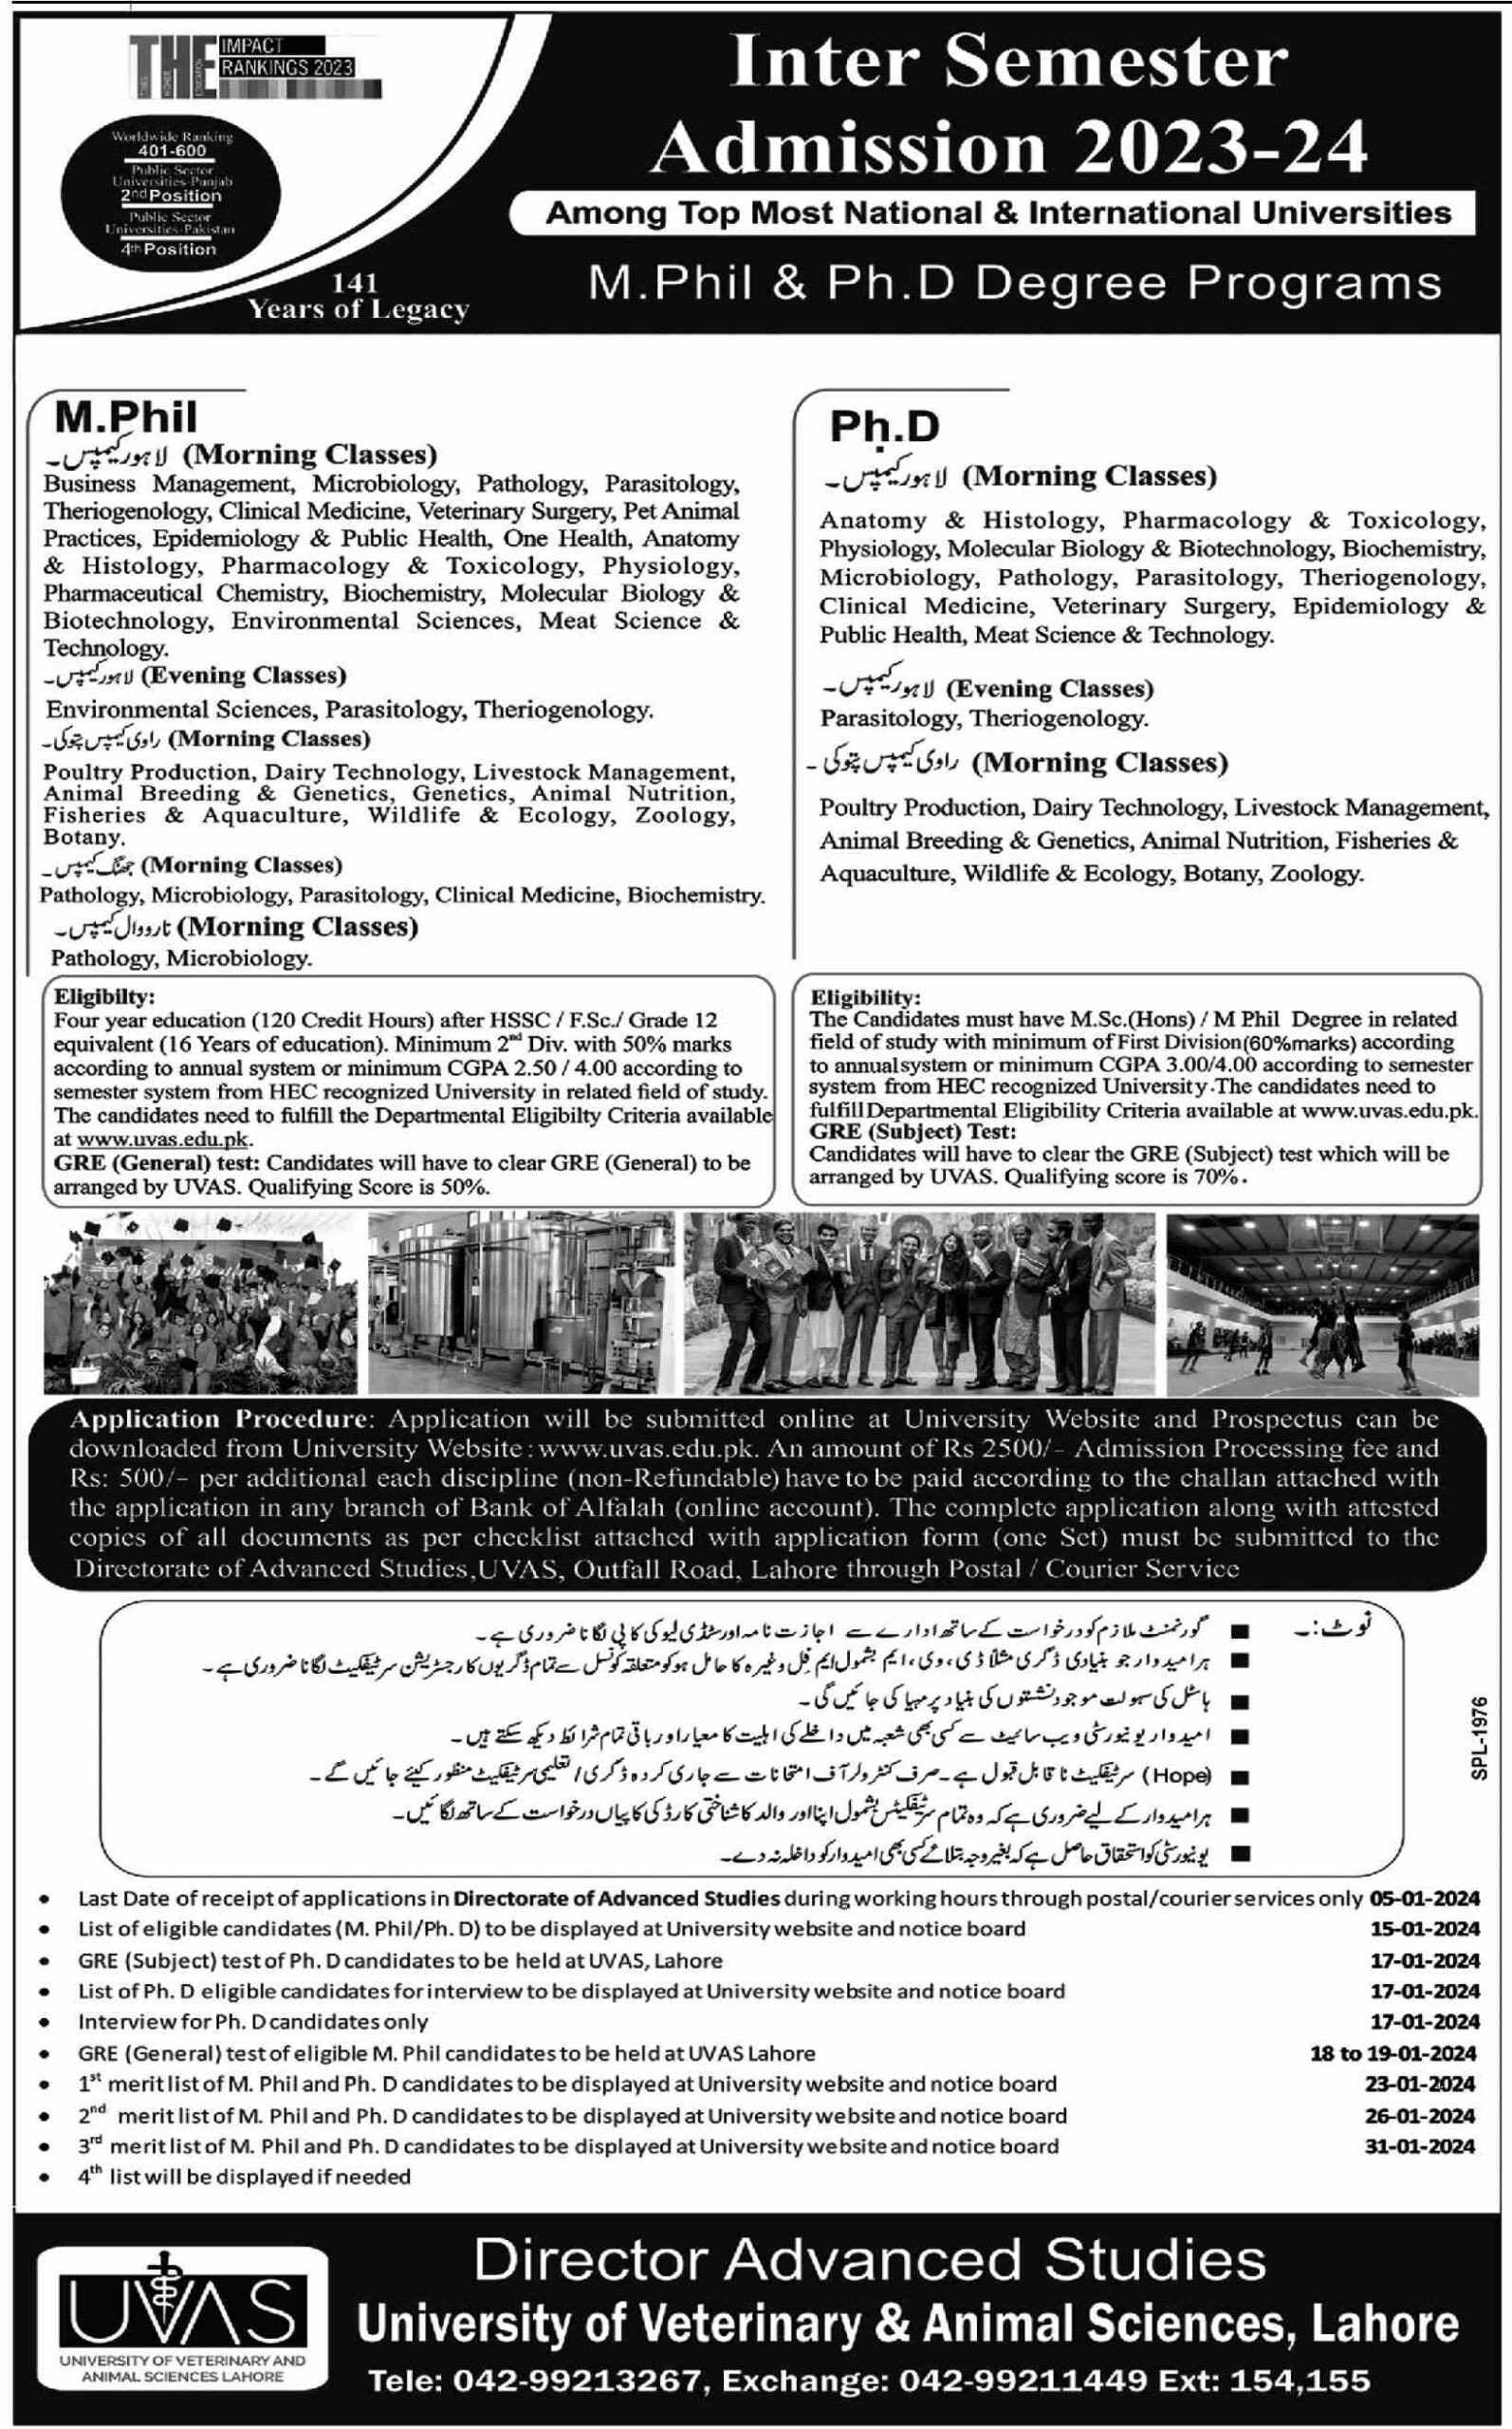 UVAS Lahore Inter Semester Admission 2023-2024 MPhil & PhD Degree Programs